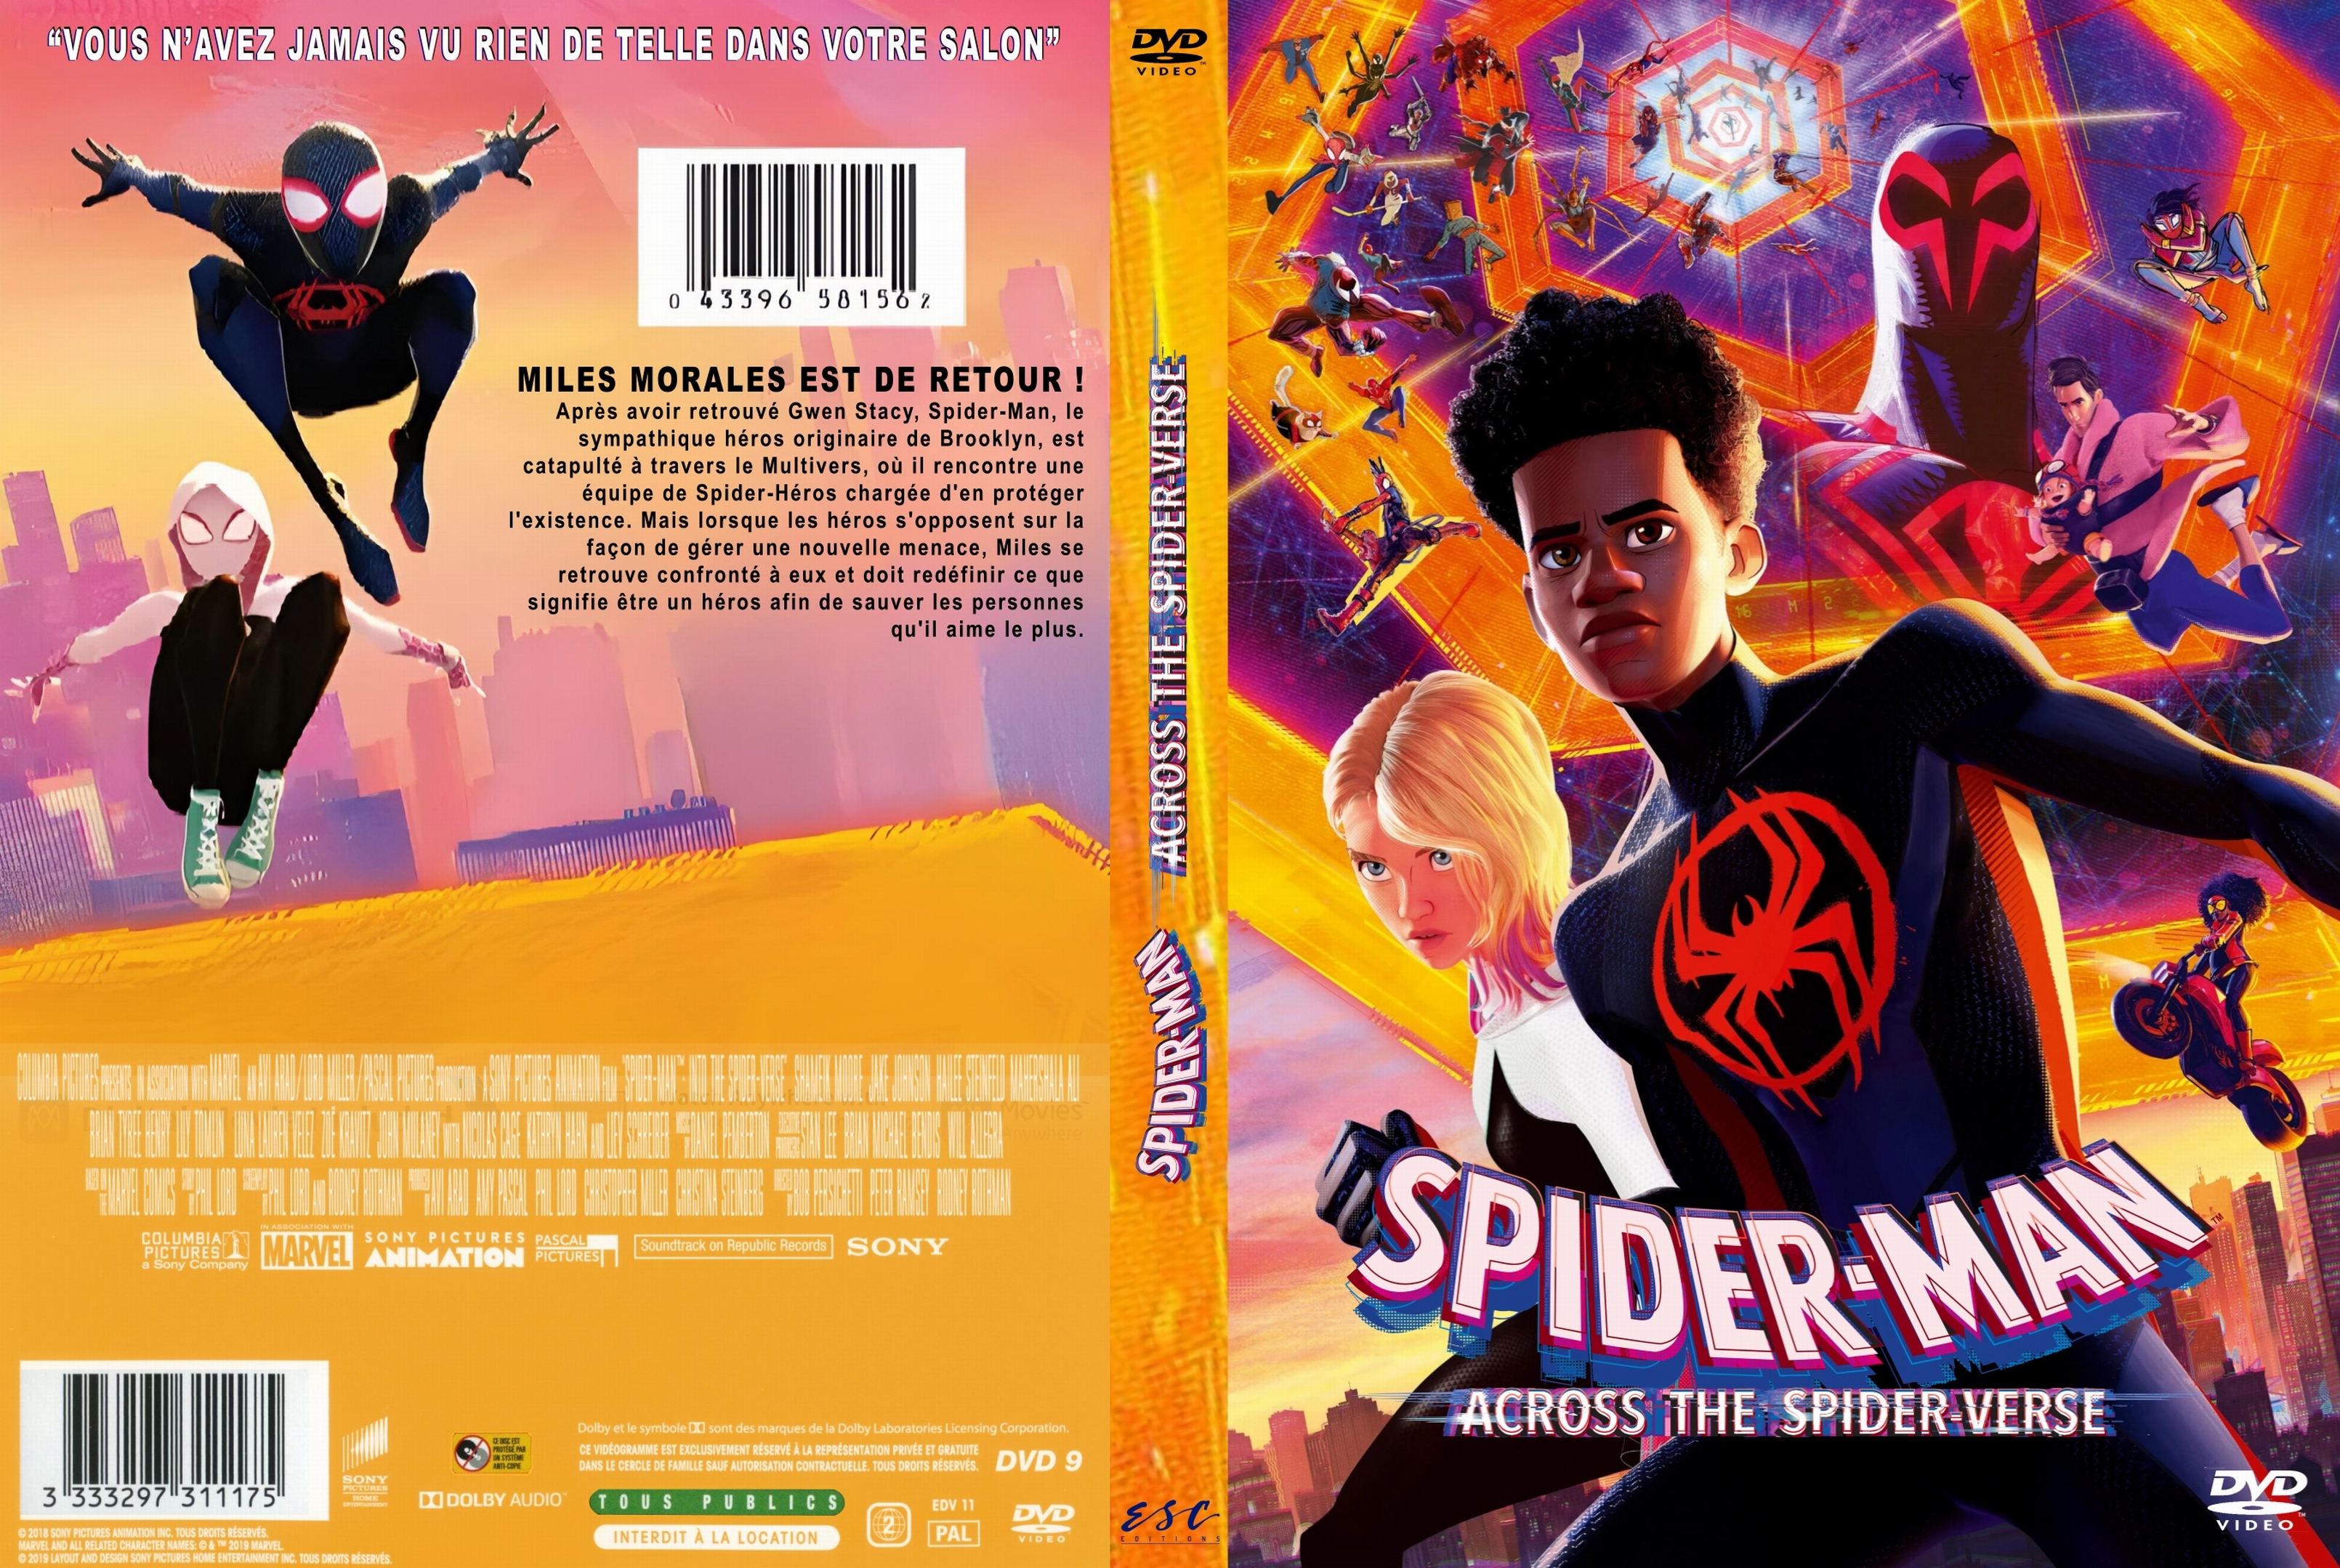 Jaquette DVD Spiderman across the spider verse custom